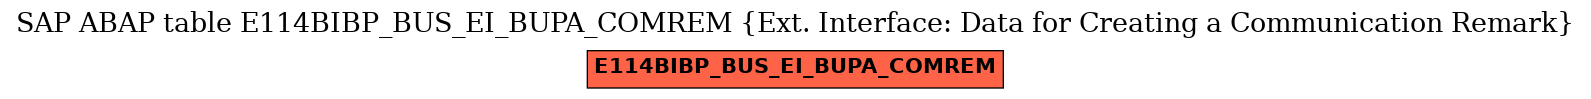 E-R Diagram for table E114BIBP_BUS_EI_BUPA_COMREM (Ext. Interface: Data for Creating a Communication Remark)